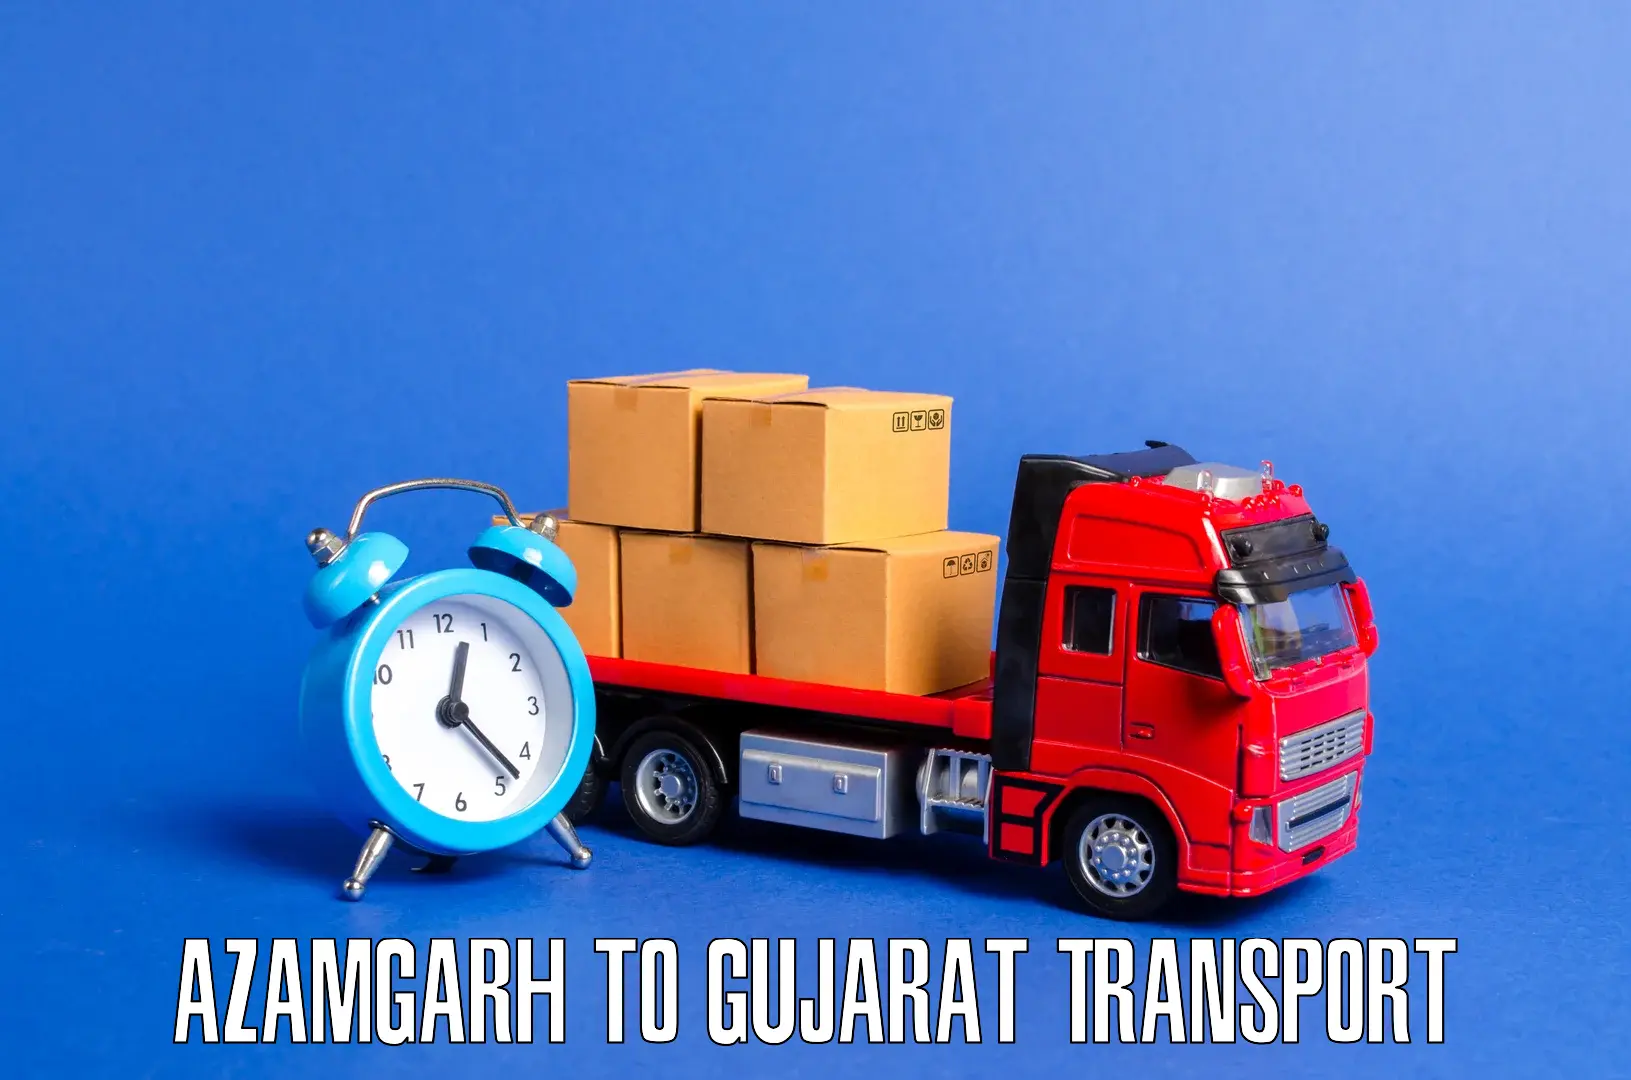 Shipping partner Azamgarh to Vatadara